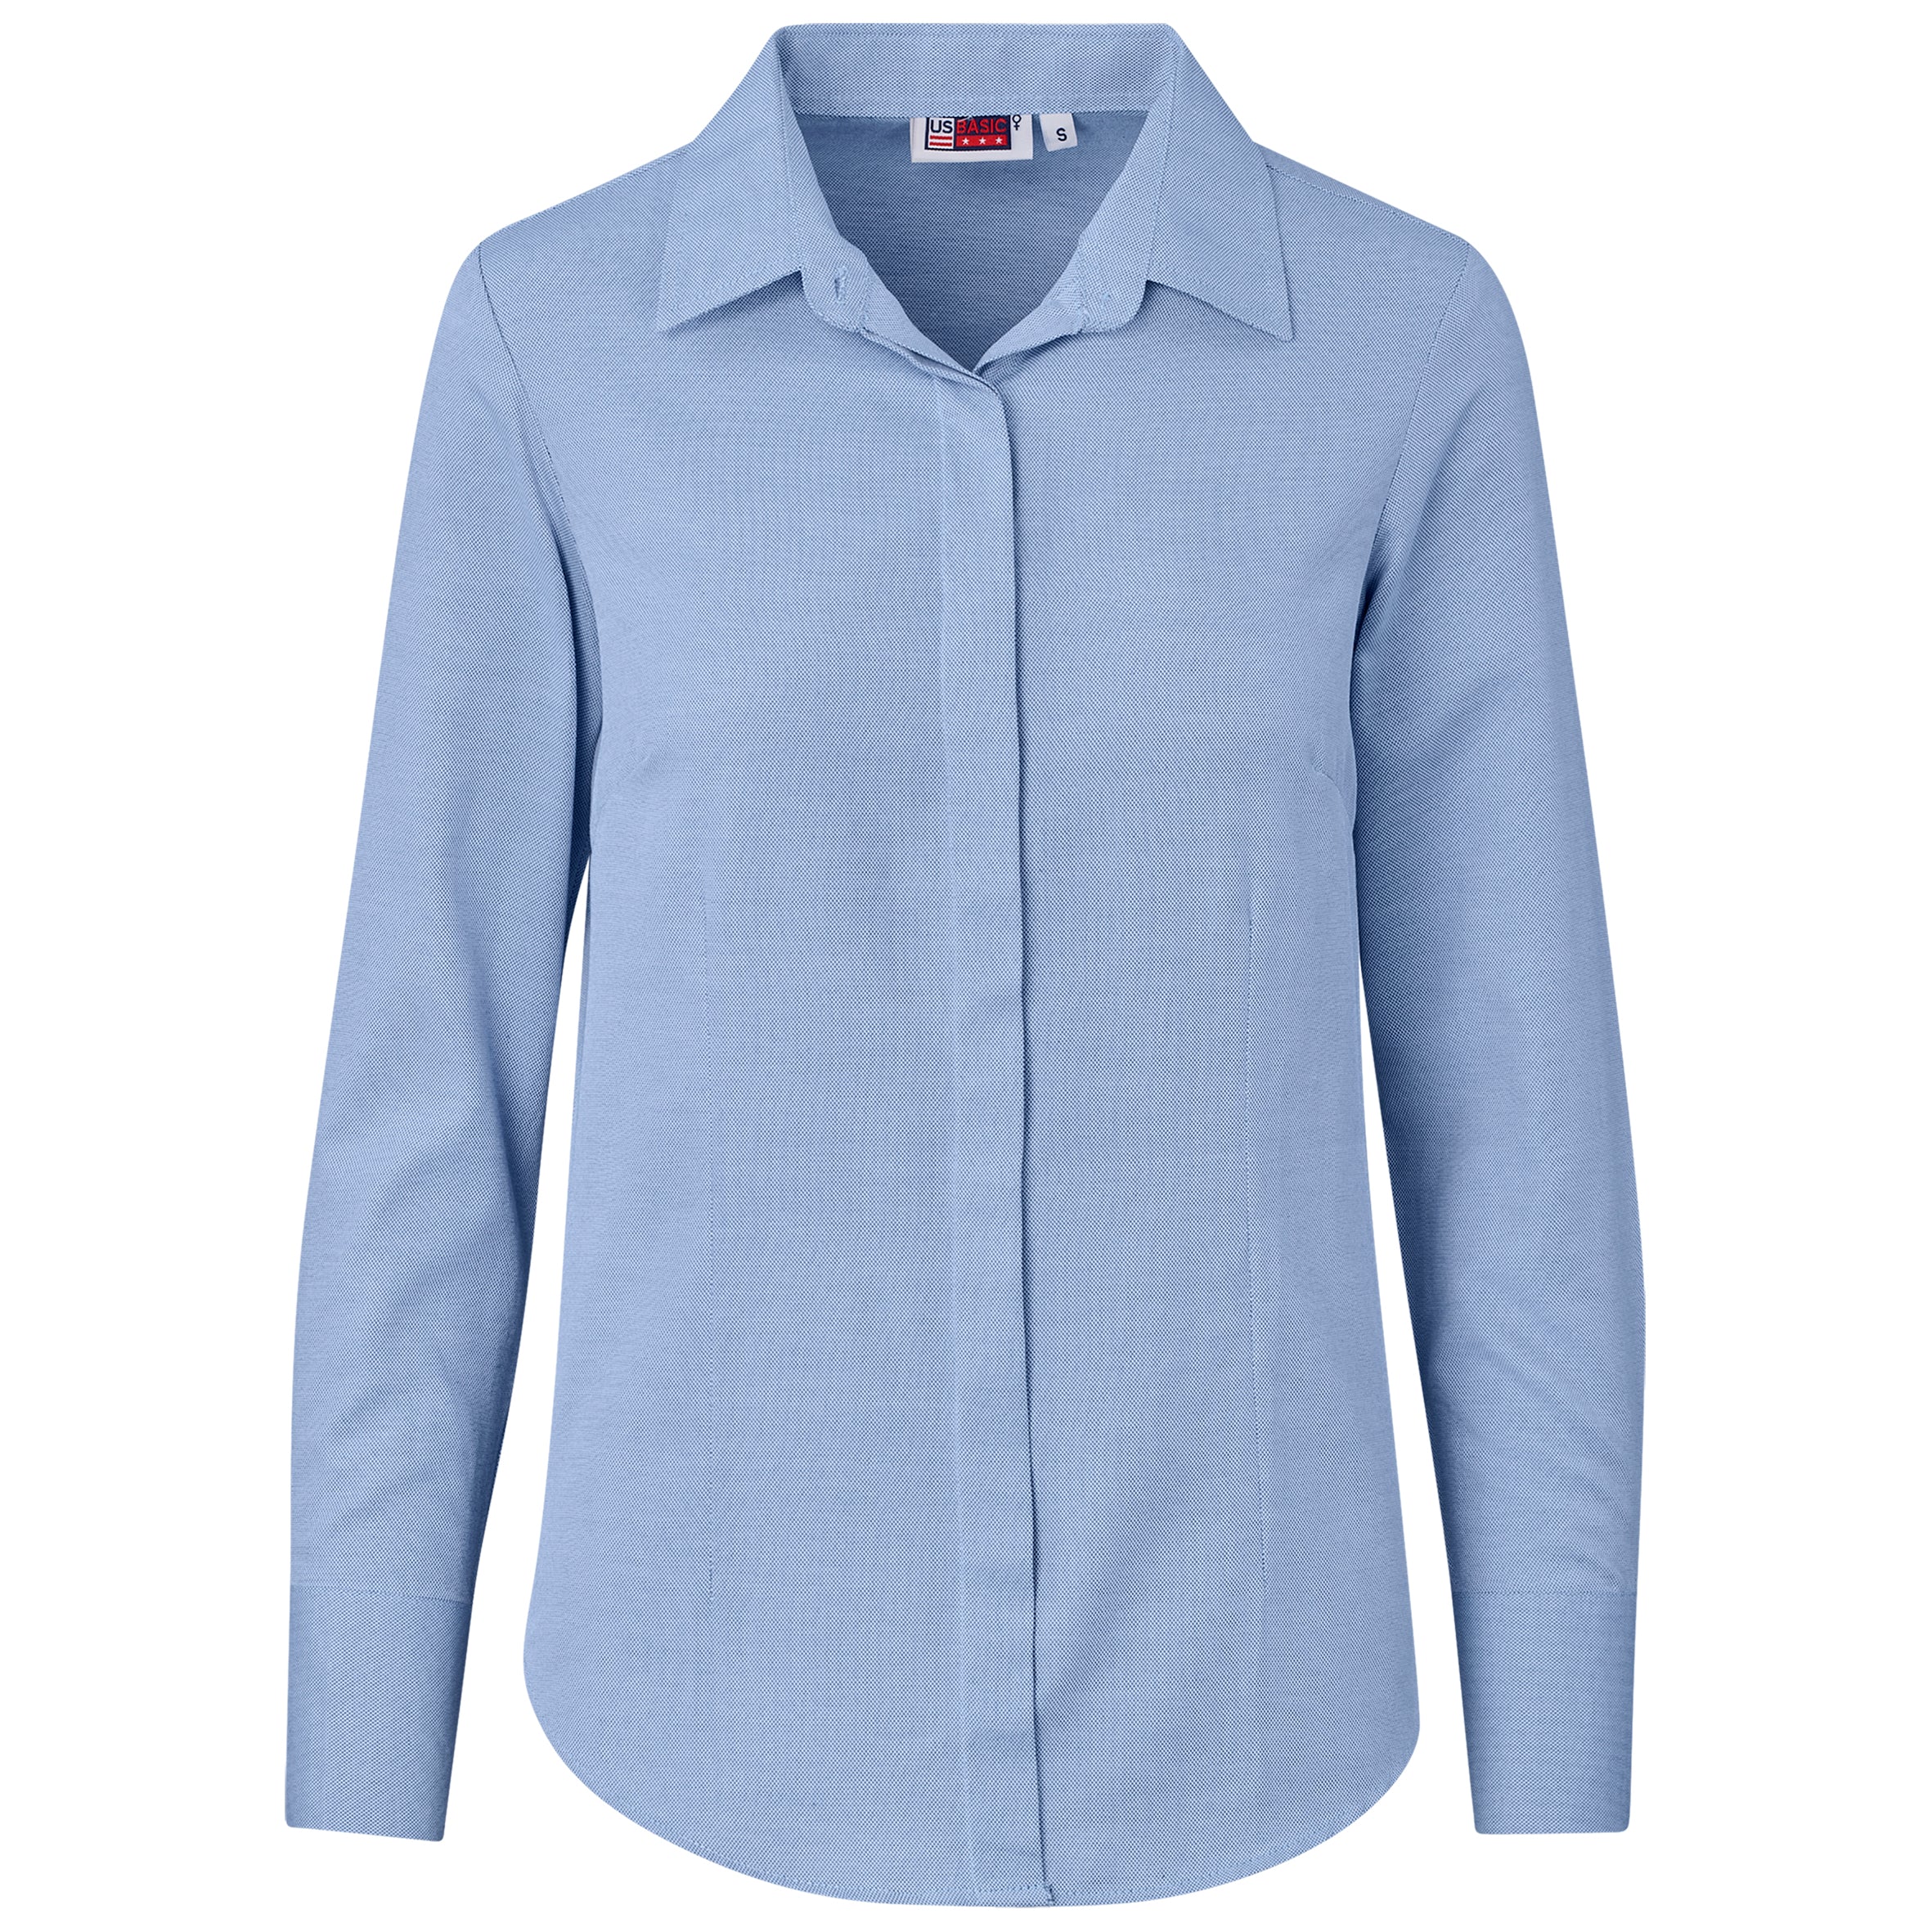 Ladies Long Sleeve Wallstreet Shirt - Blue